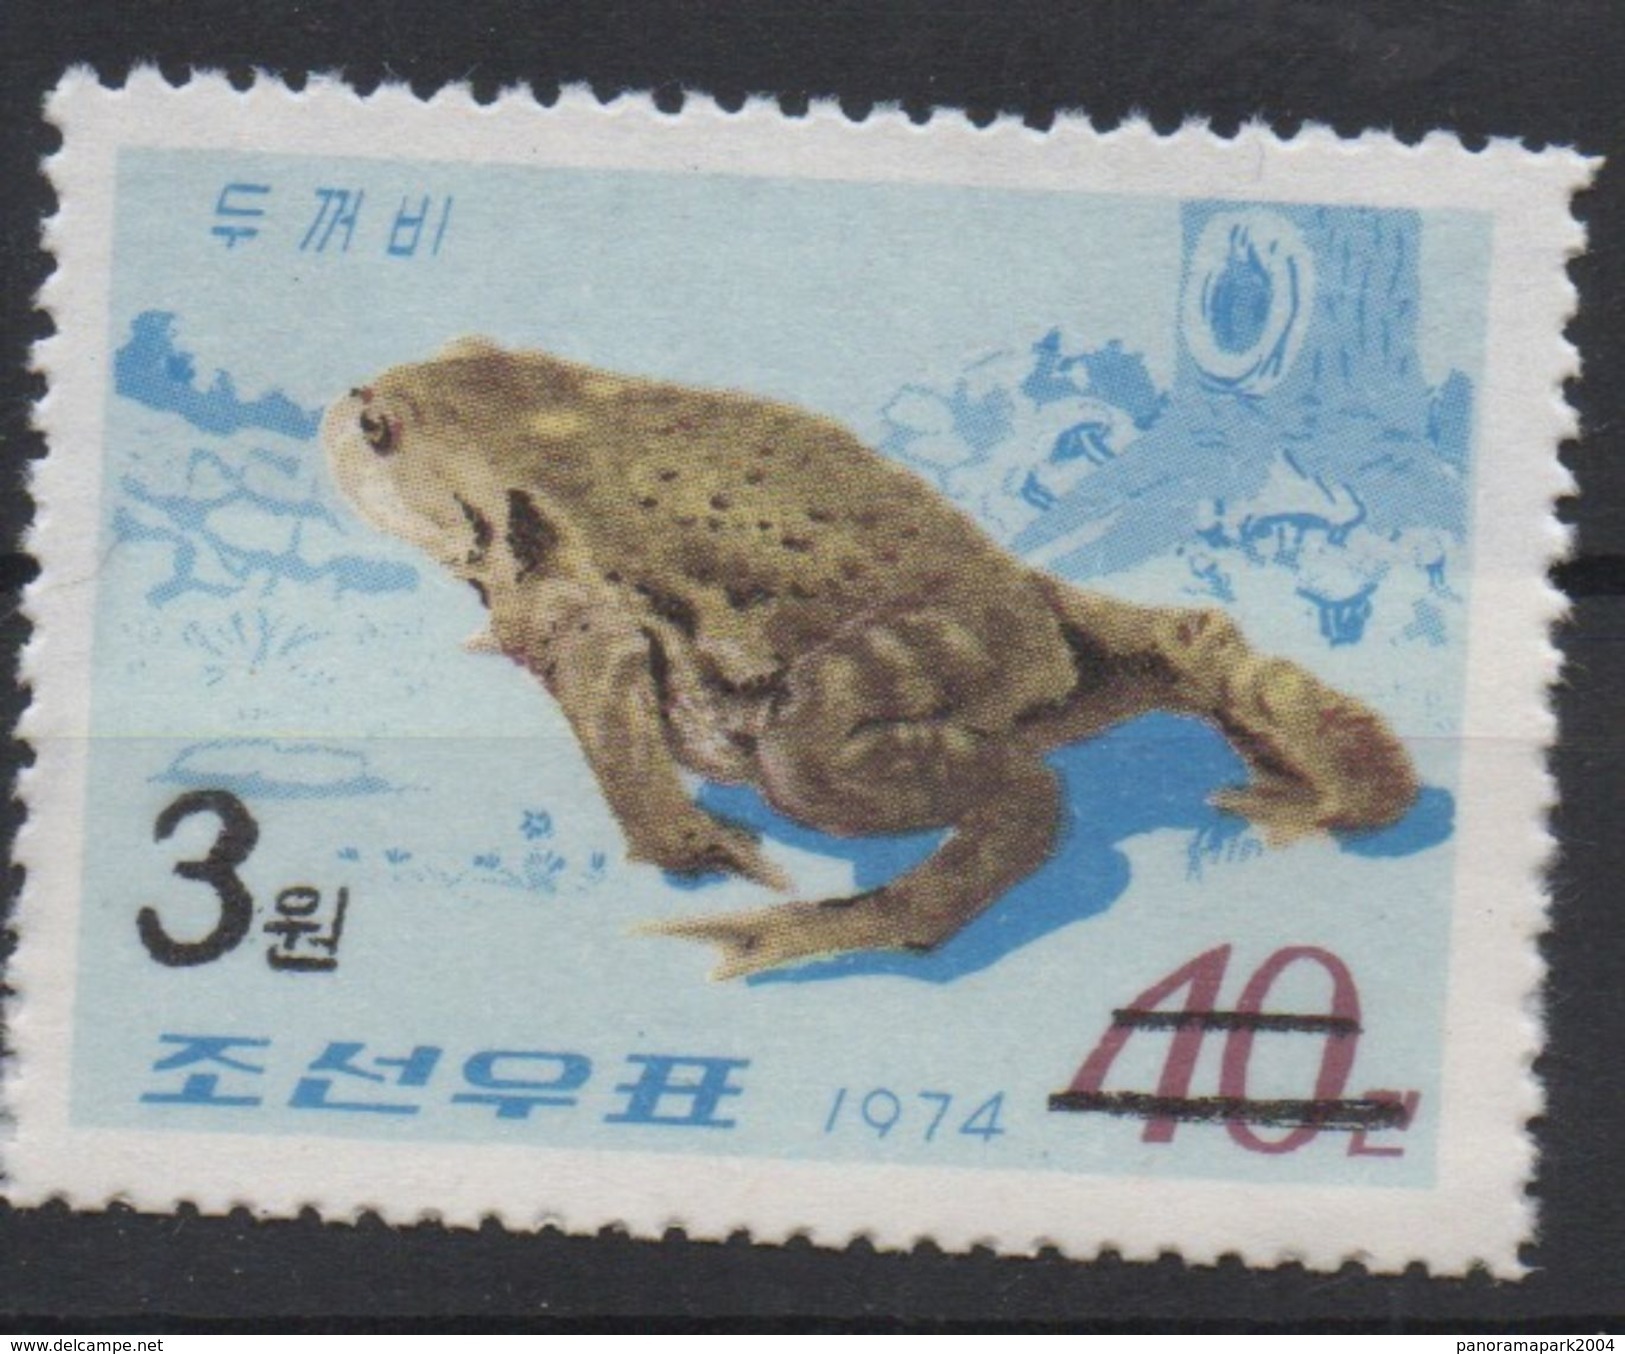 North Korea Corée Du Nord 2006 Mi. 5032 Surchargé Überdruck OVERPRINT Faune Fauna Grenouille Frog Frosch MNH** RARE - Kikkers